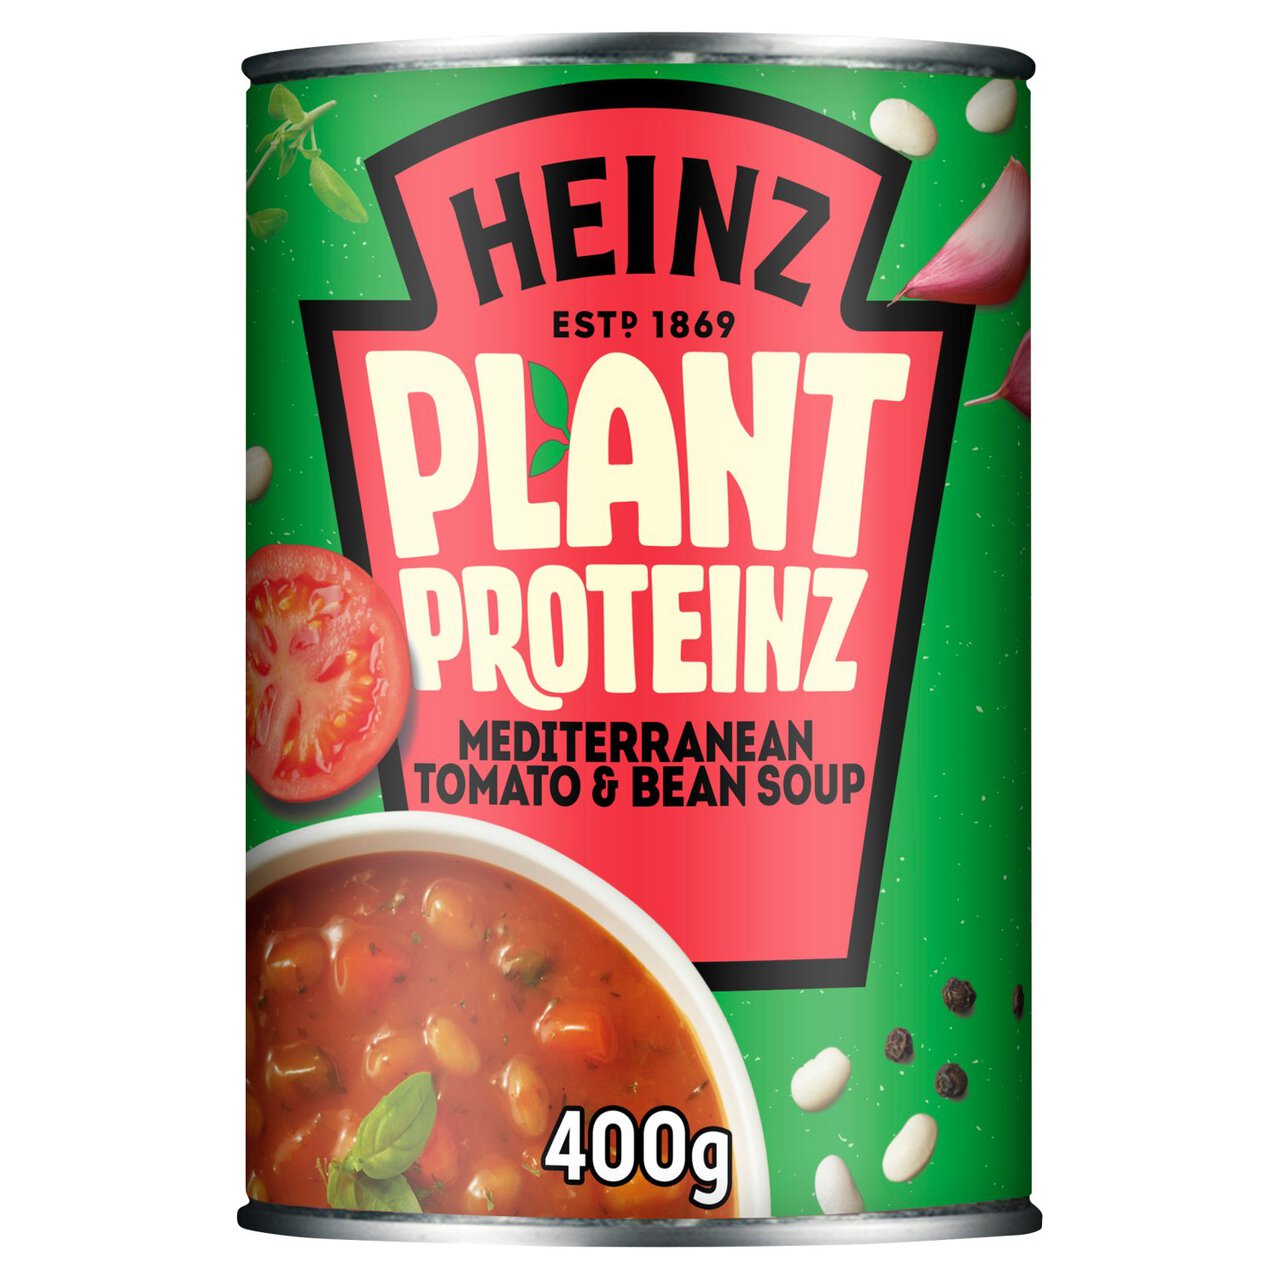 Heinz Plant Proteinz Mediterranean Tomato Soup 400g